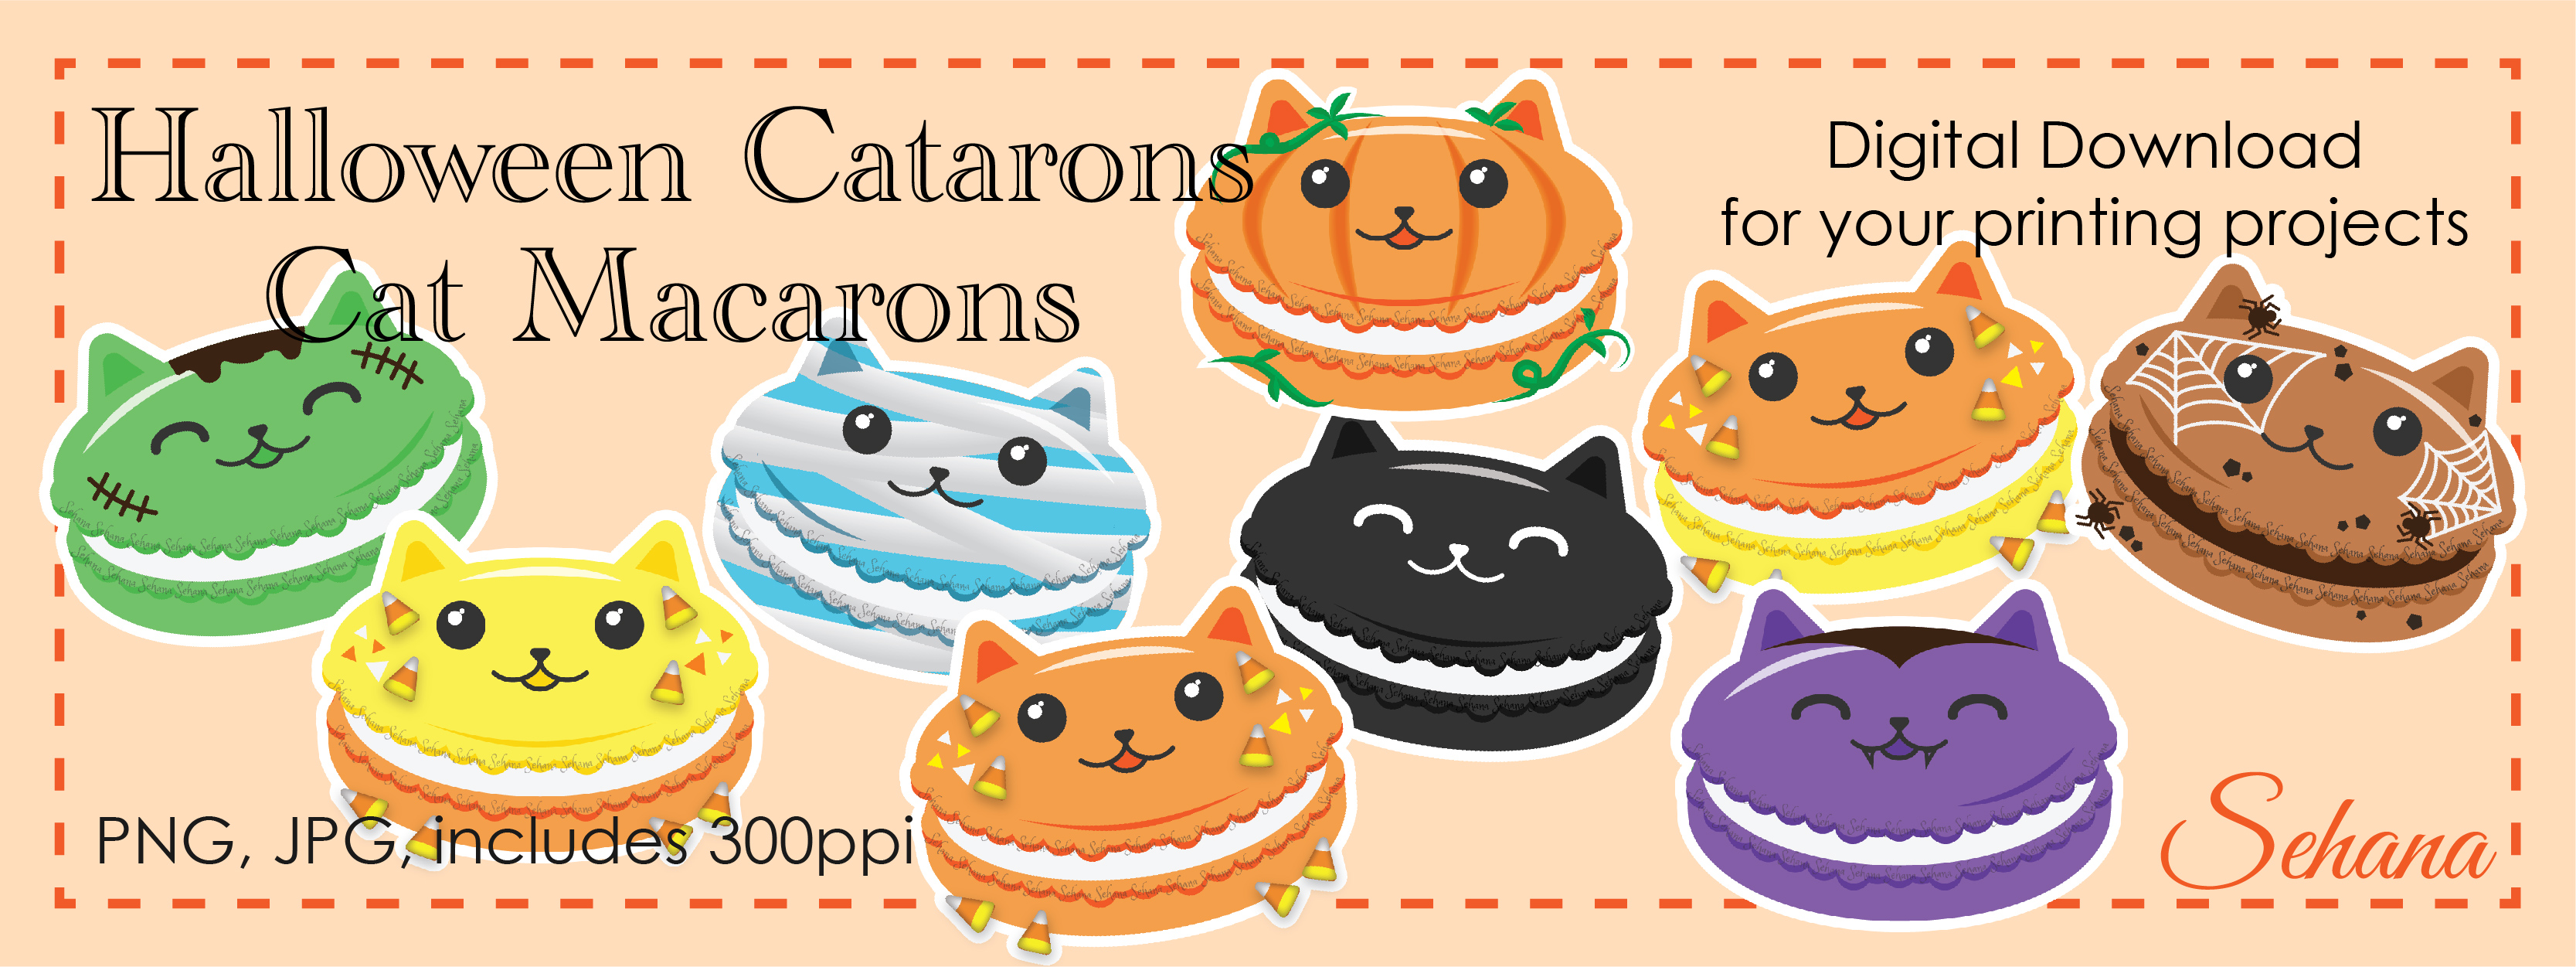 Halloween Cat Macarons